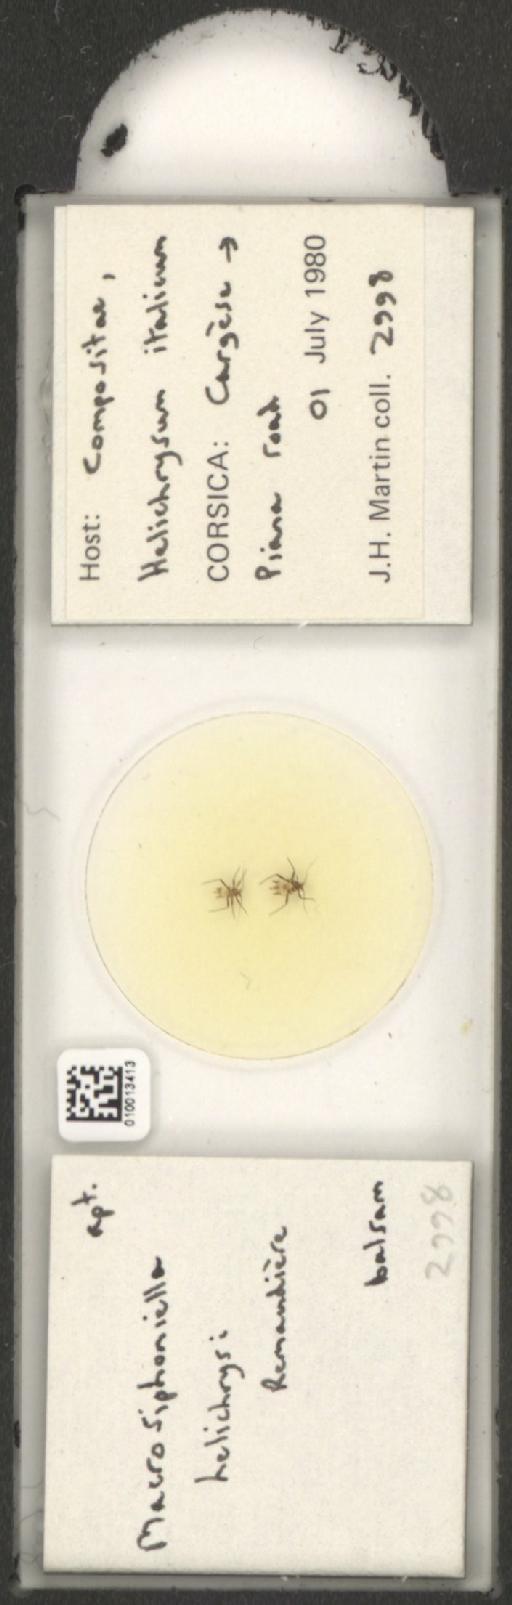 Macrosiphoniella helichrysi Remaudiere, 1952 - 010013413_112660_1094725